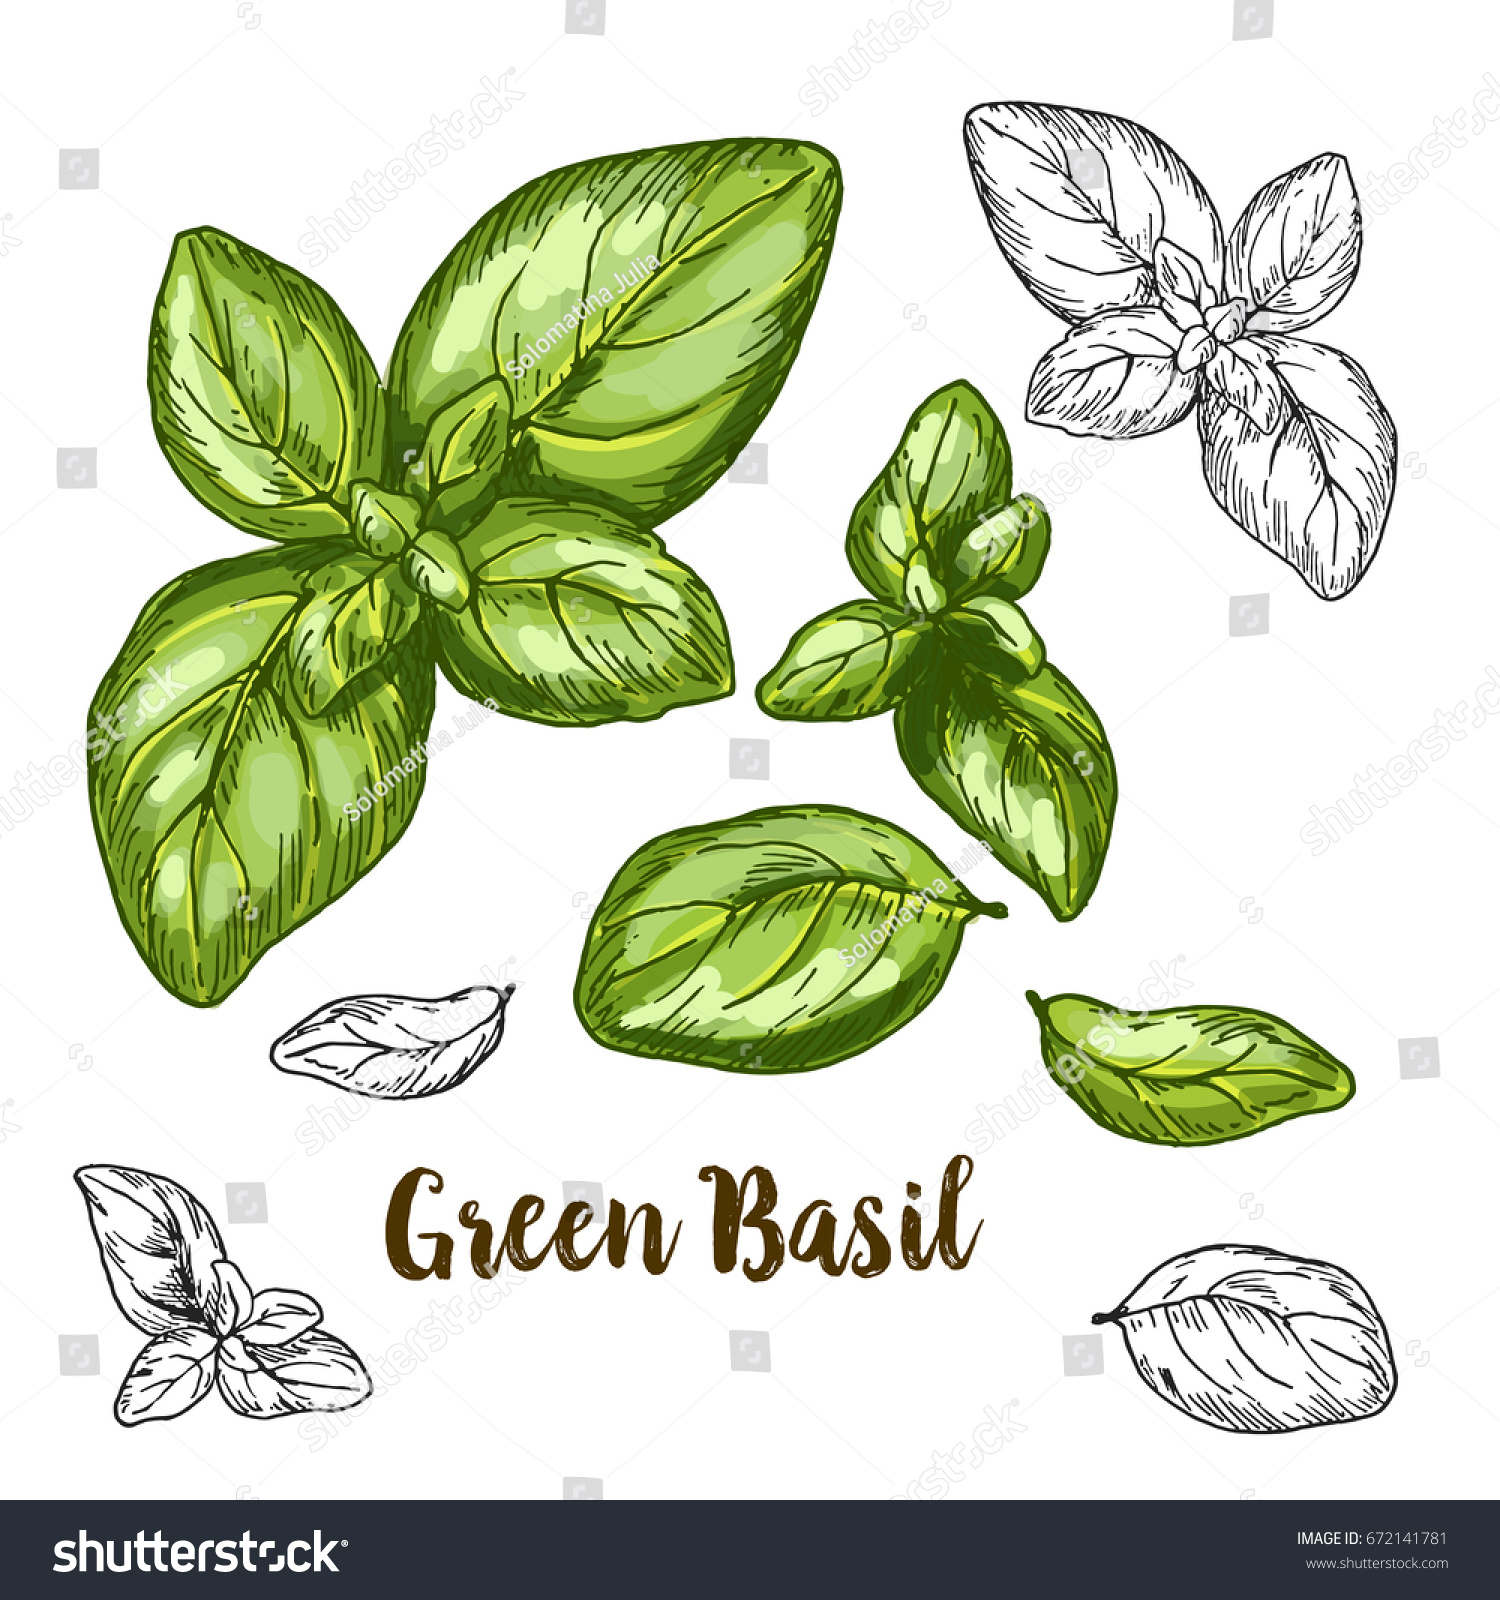 Full color realistic sketch illustration of green basil, vector illustration #672141781